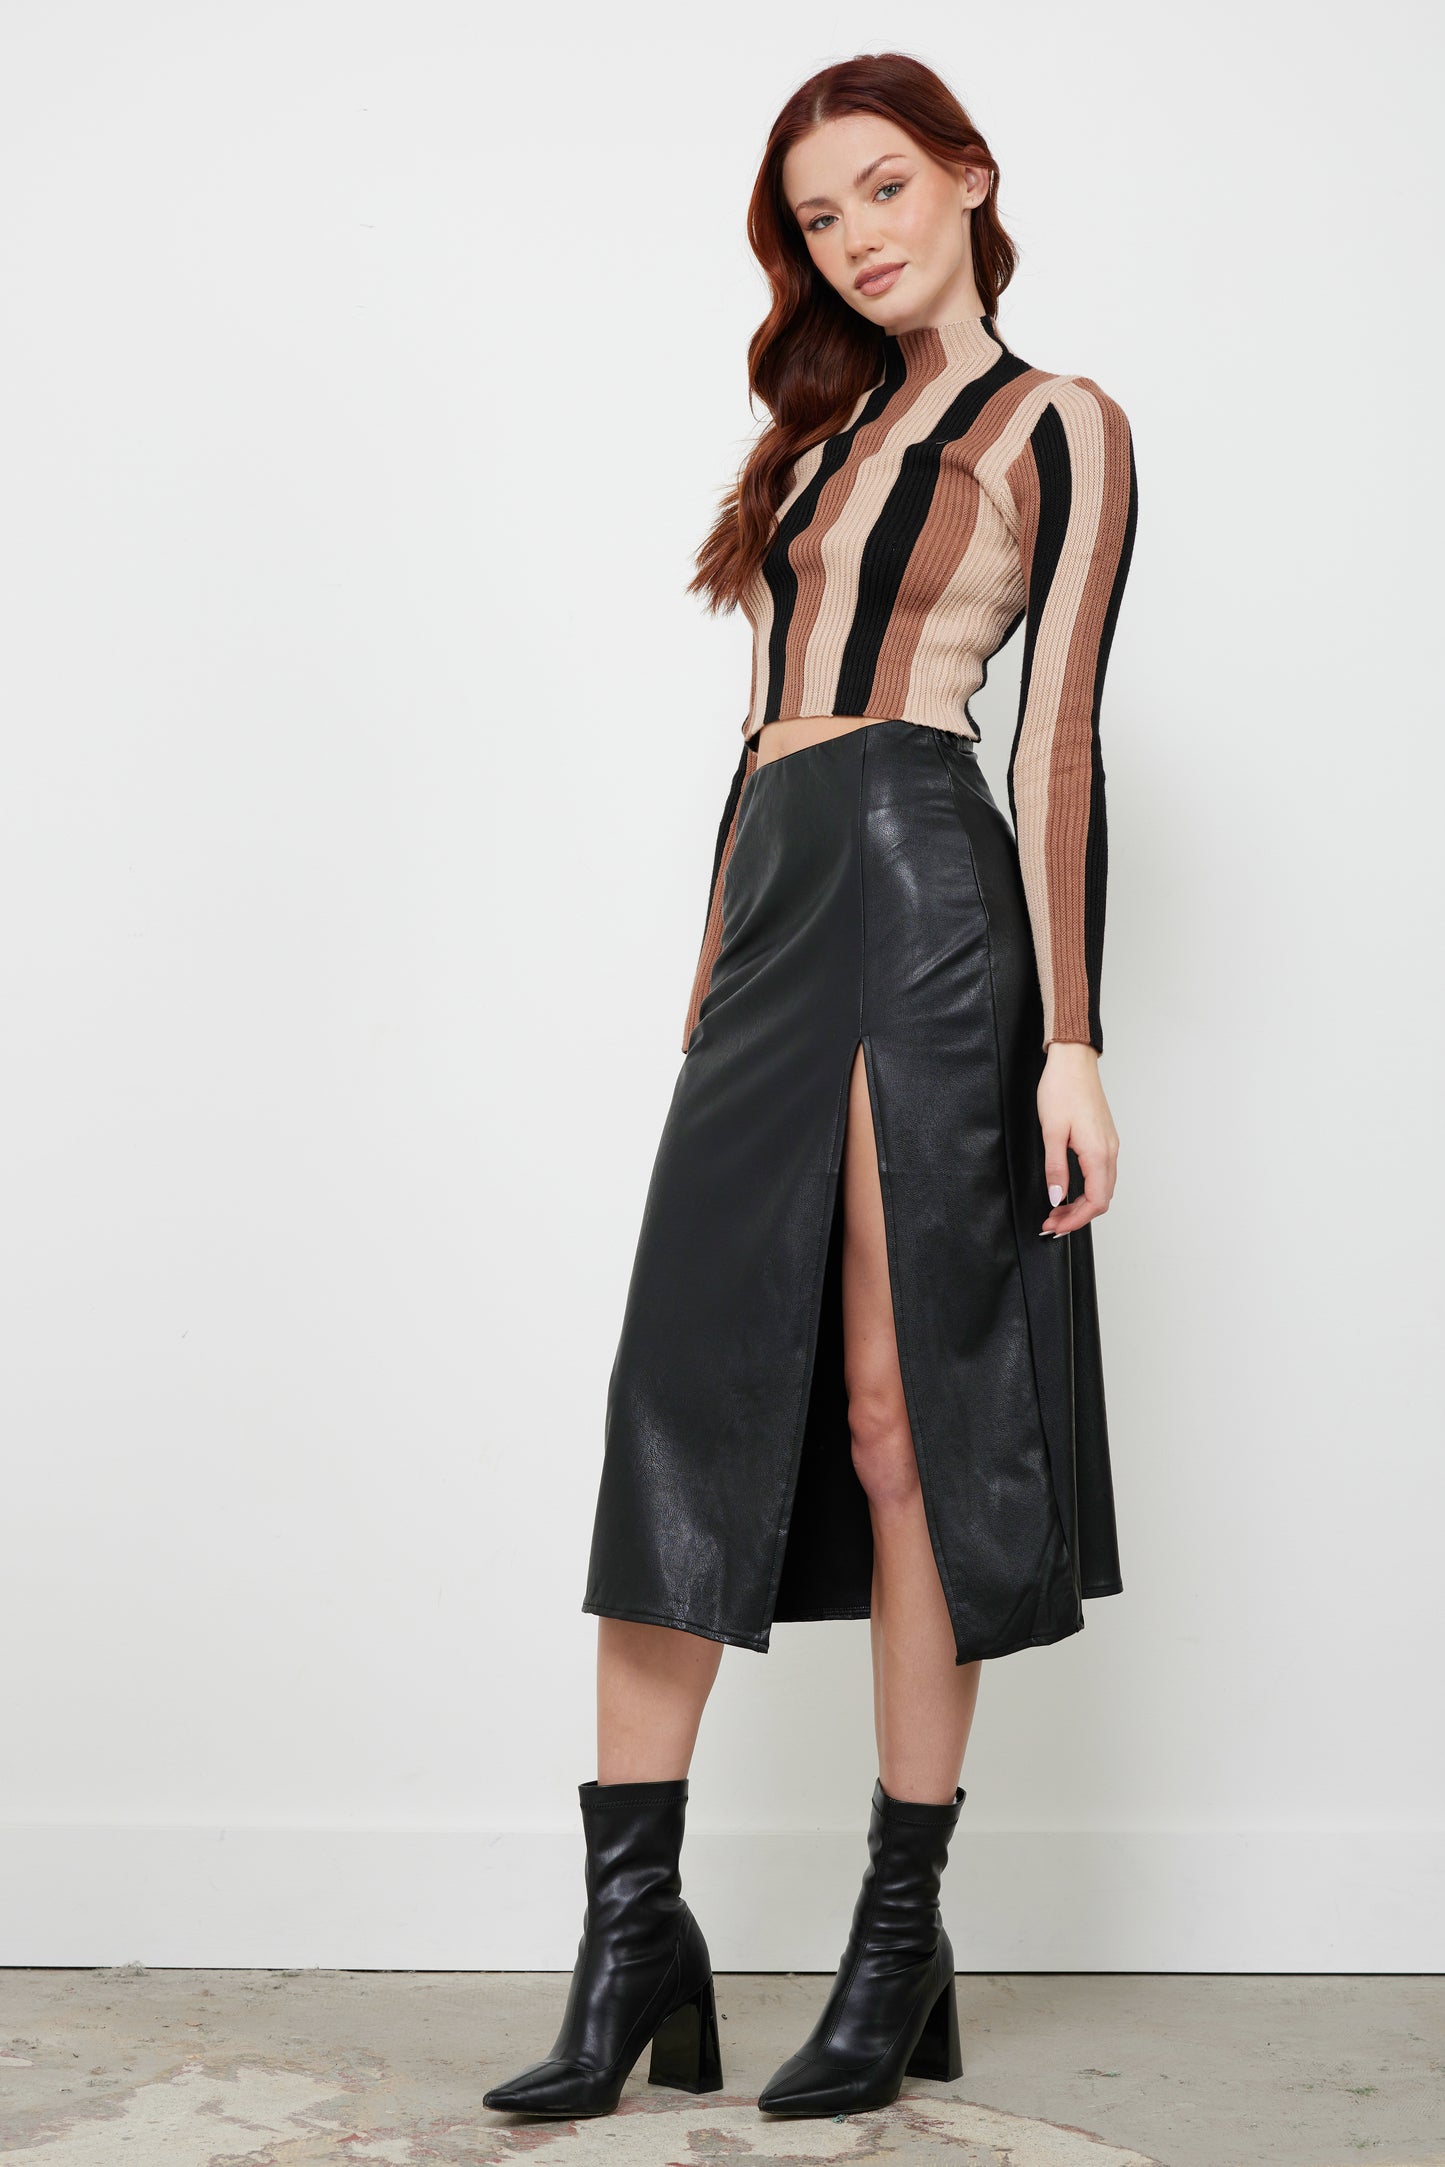 Maneater Black Leather Skirt